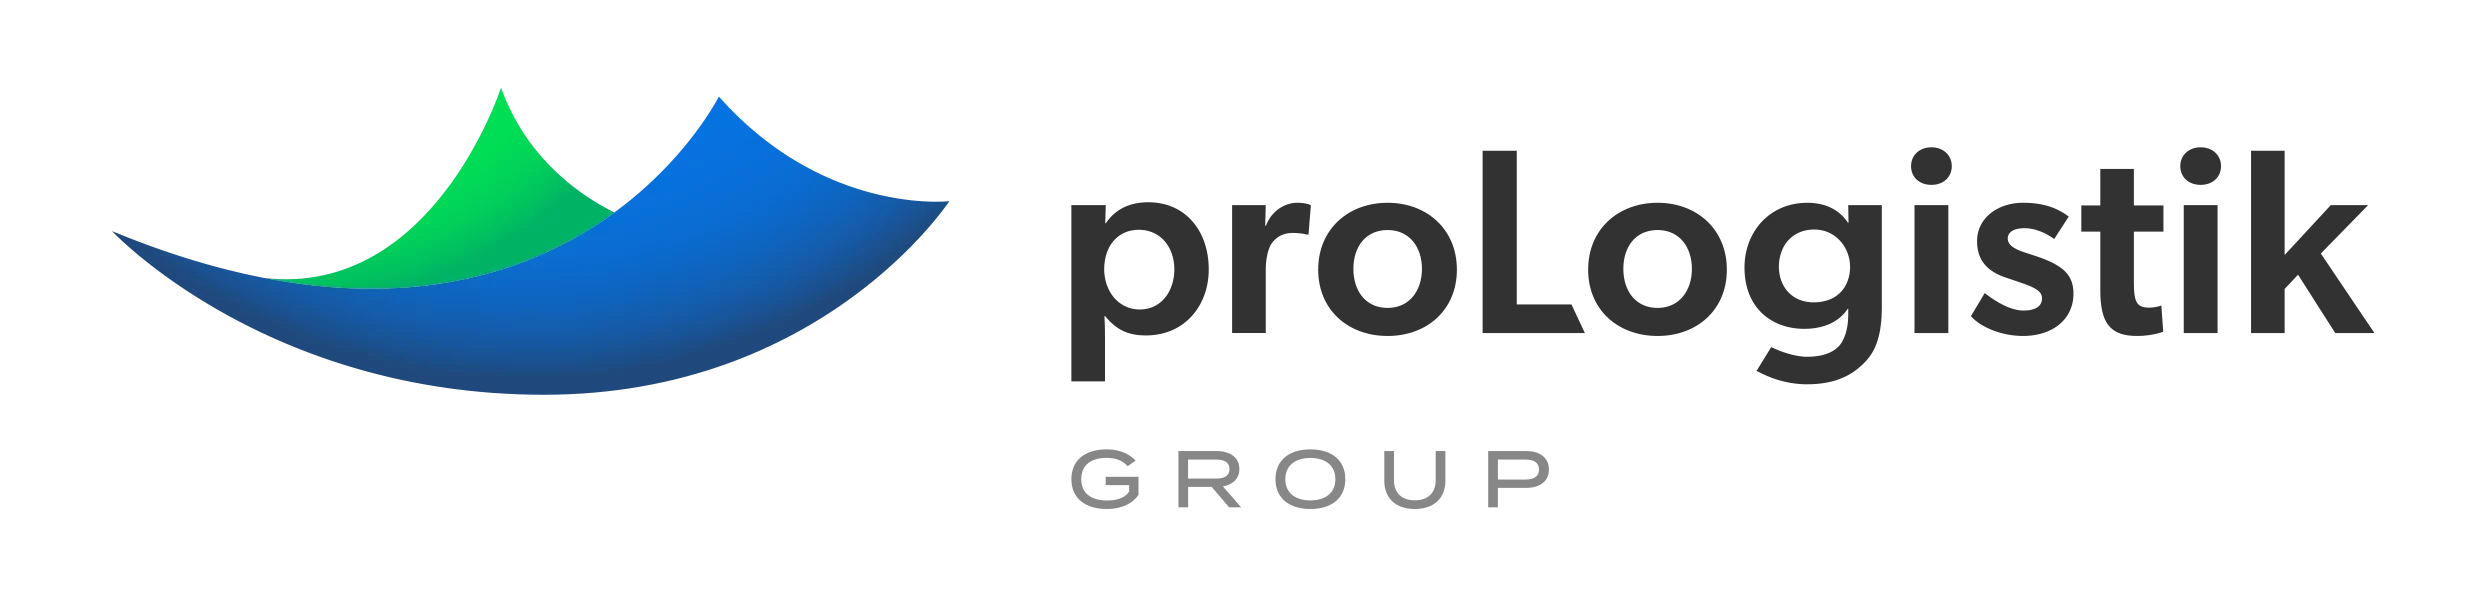 proLogistik Logo